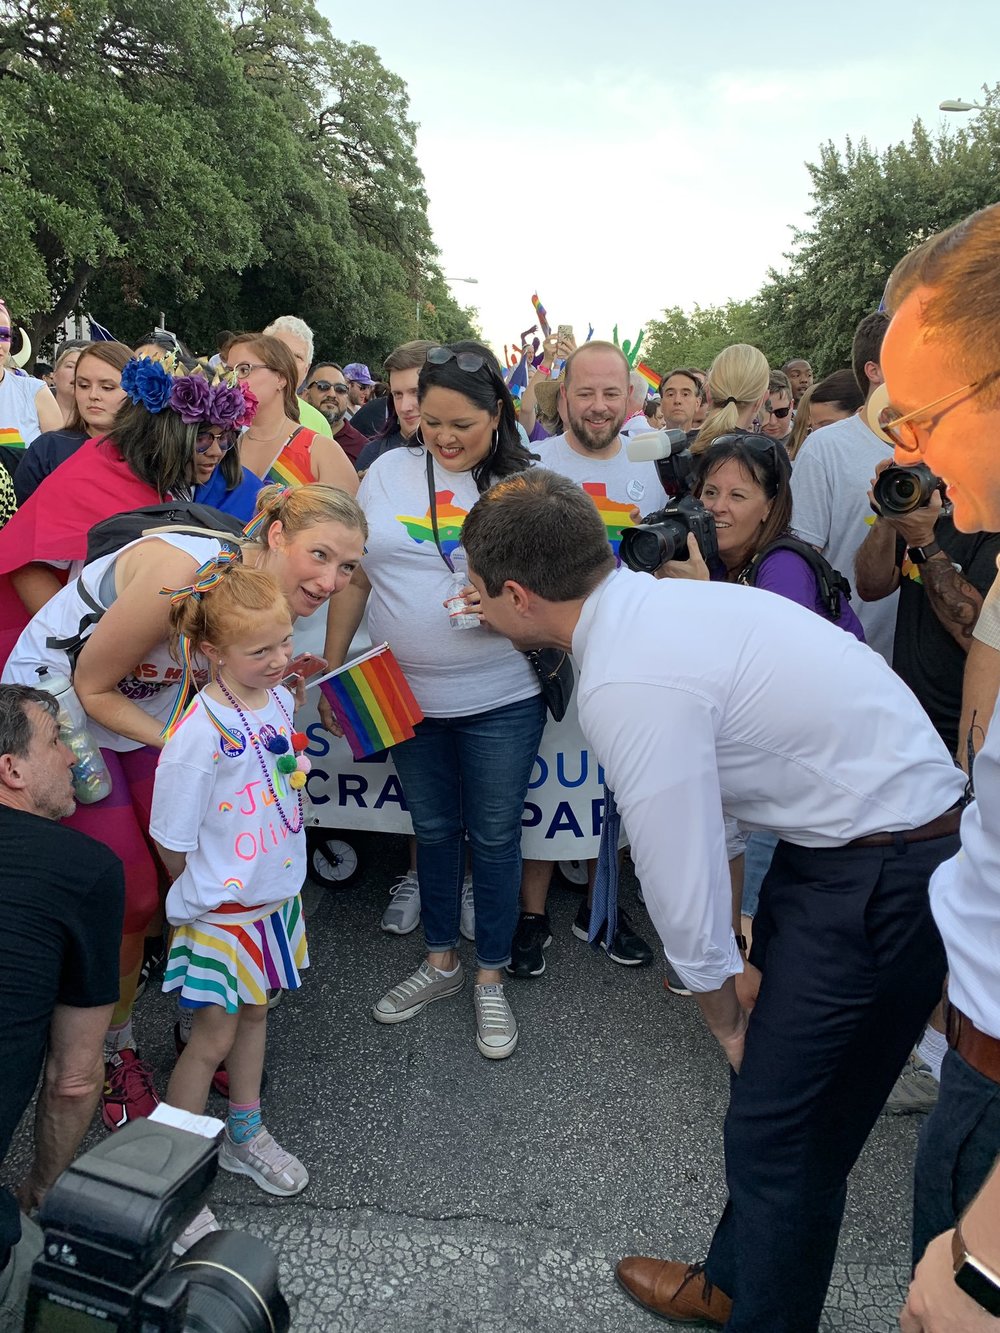  Pete Buttigieg at the Austin Pride Parade, Posted on Twitter by Ninasophia81 